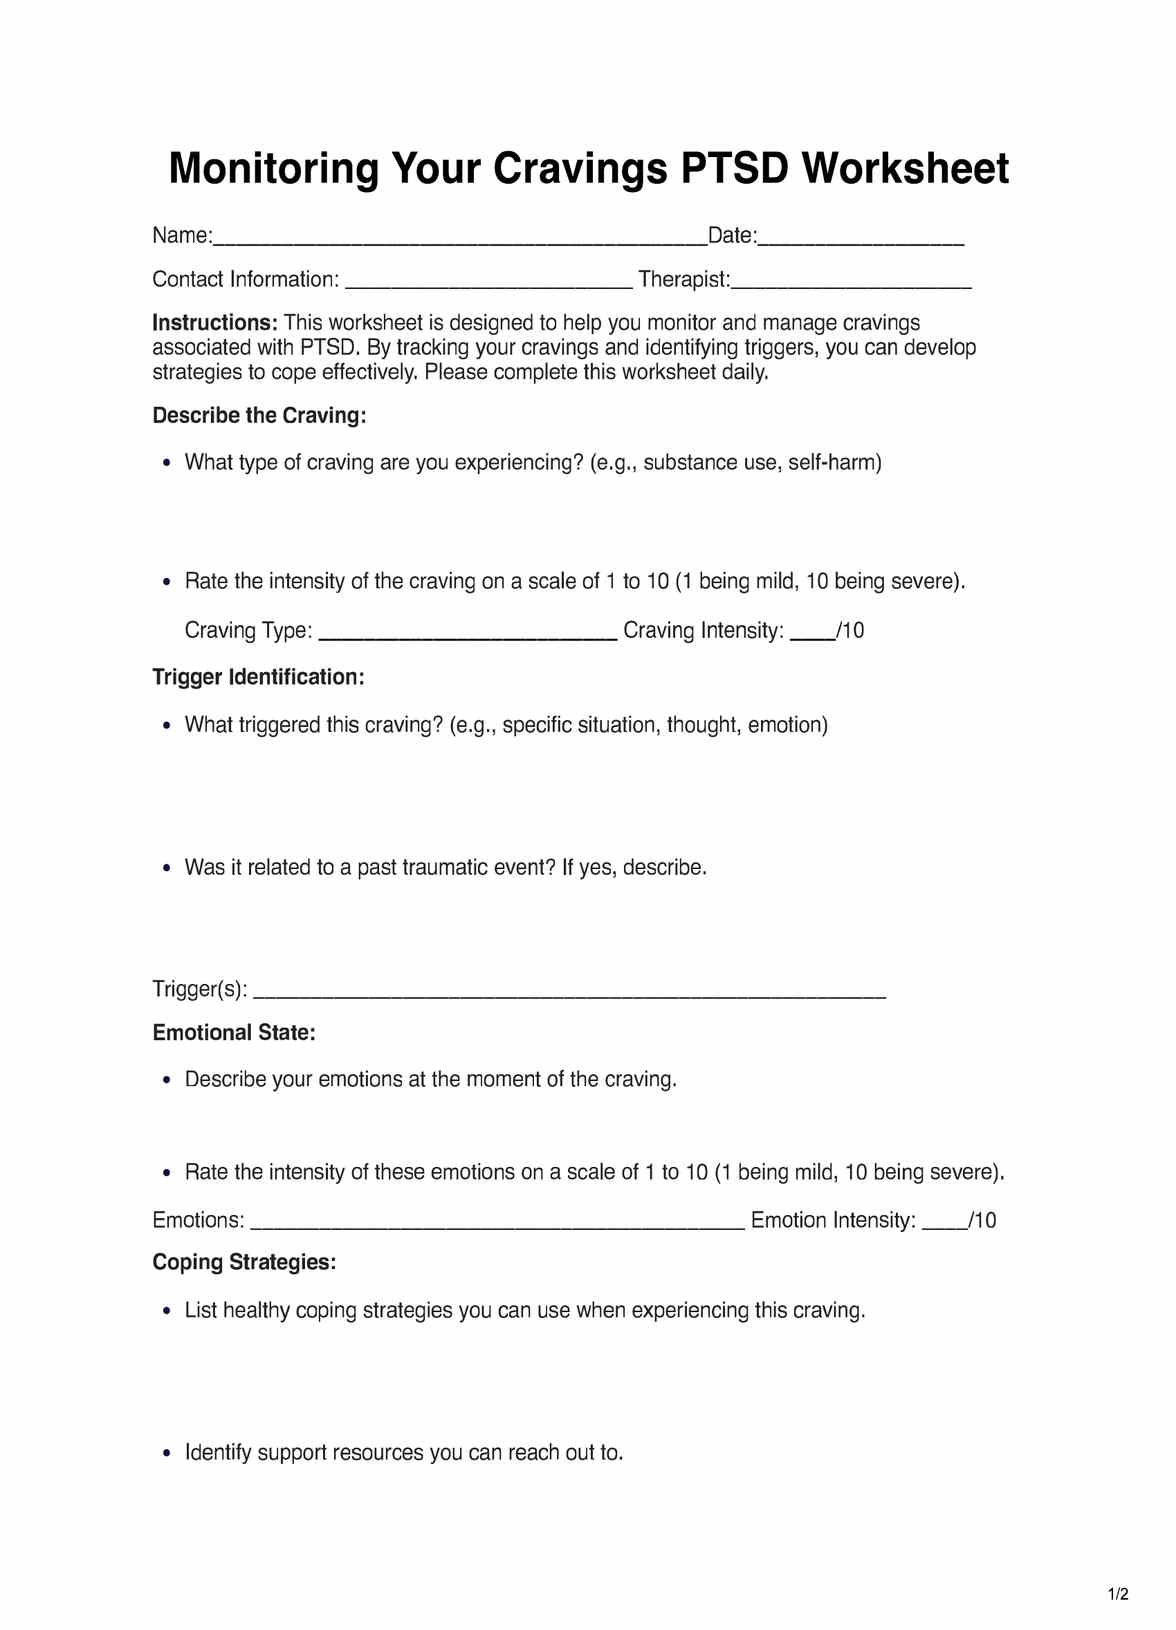 Monitoring Your Cravings PTSD Worksheet PDF Example